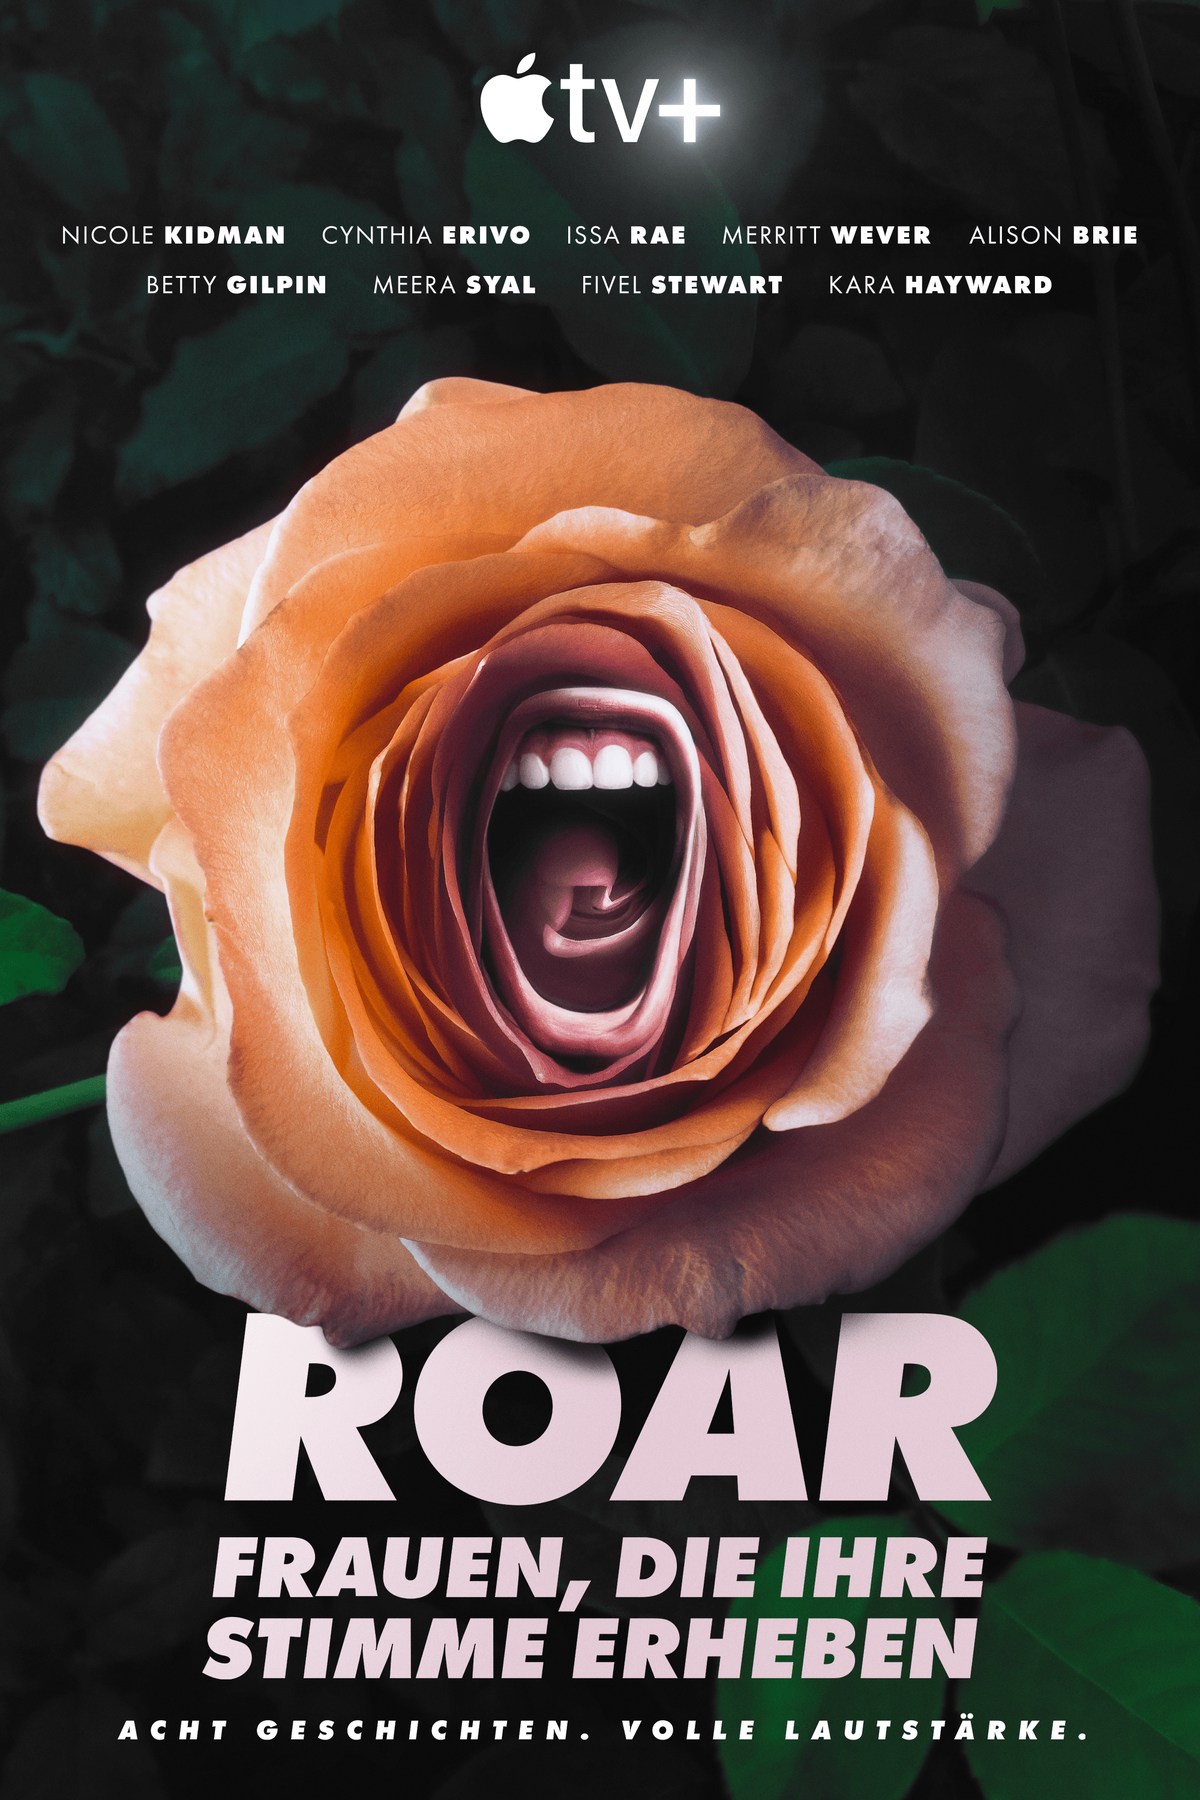 "Roar" mit Nicole Kidman: Ab 15. April auf Apple TV+